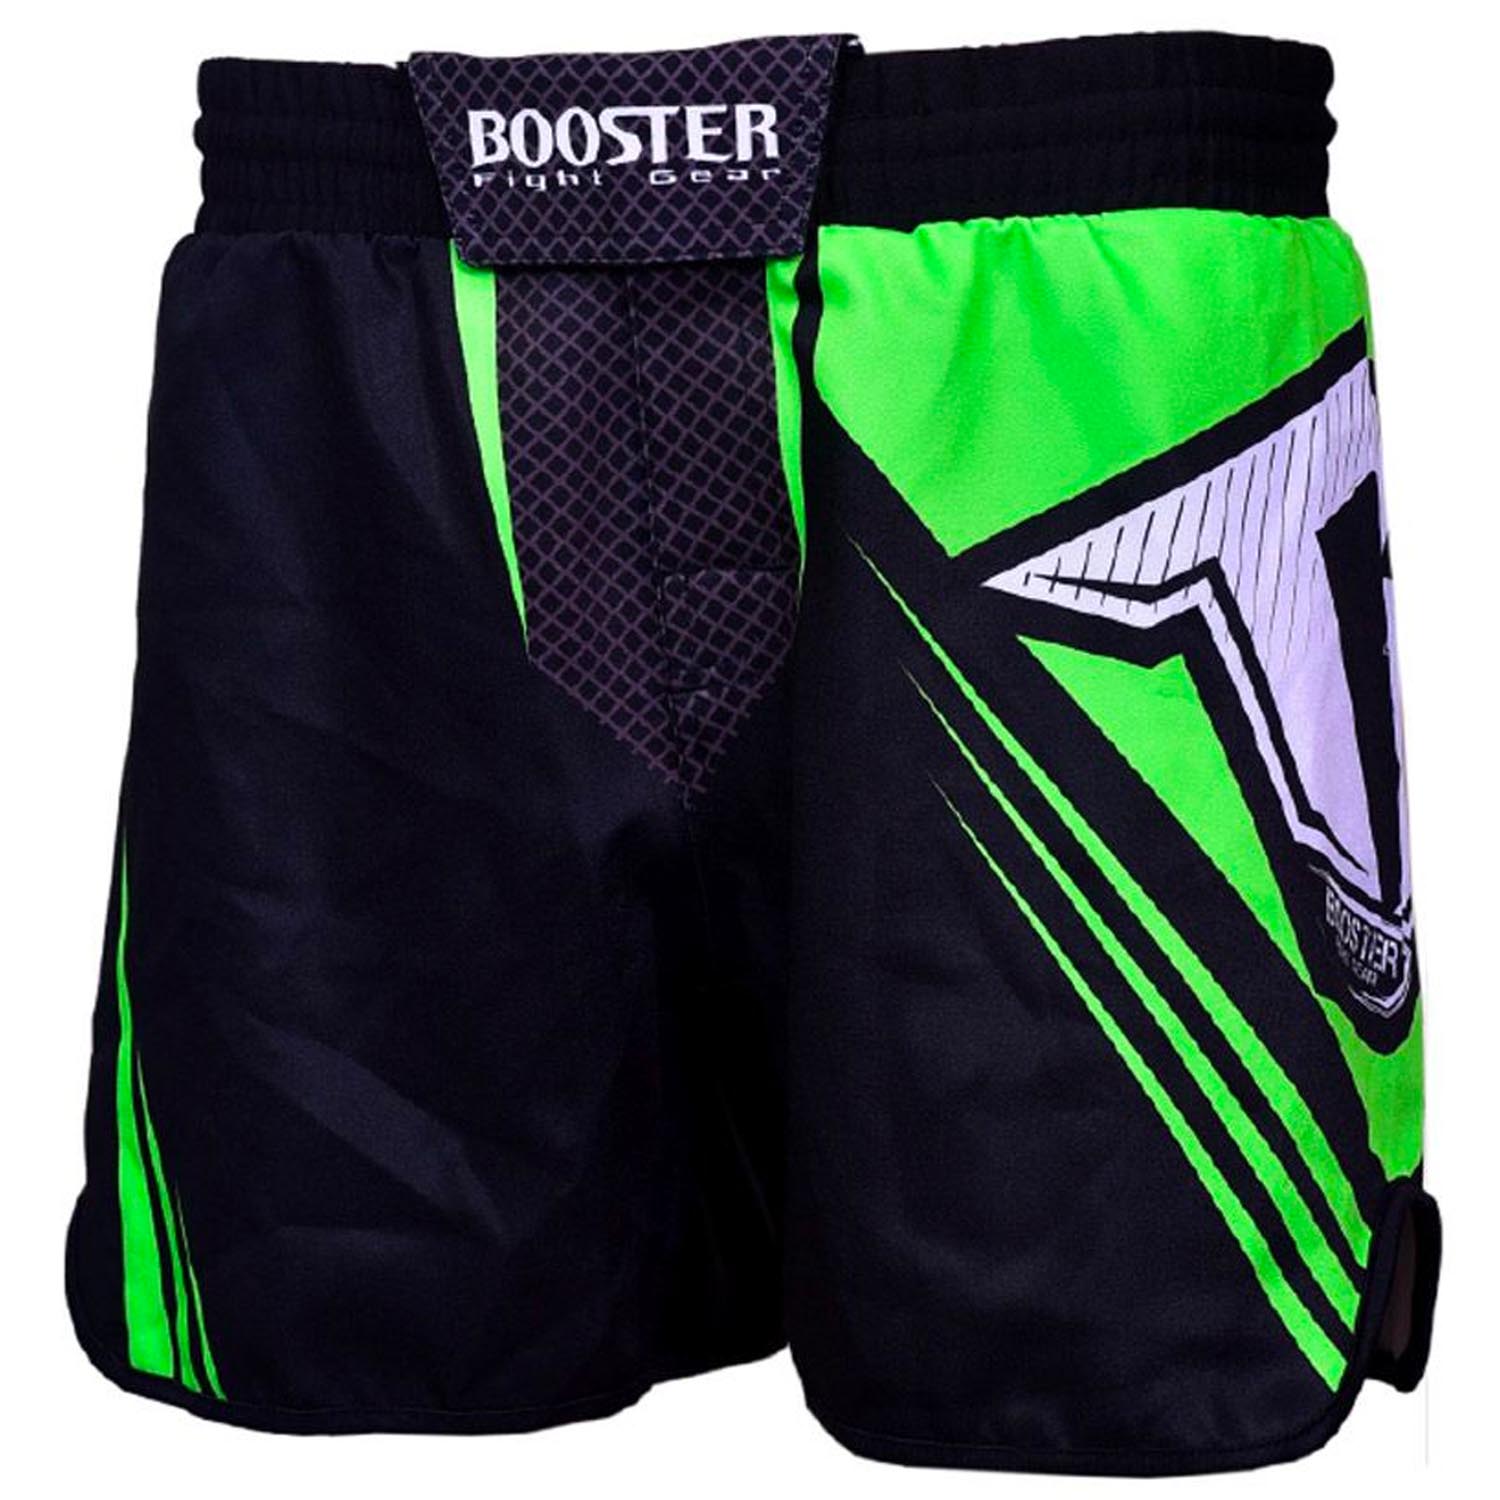 Booster MMA Fight Shorts, Xplosion 3, schwarz-grün